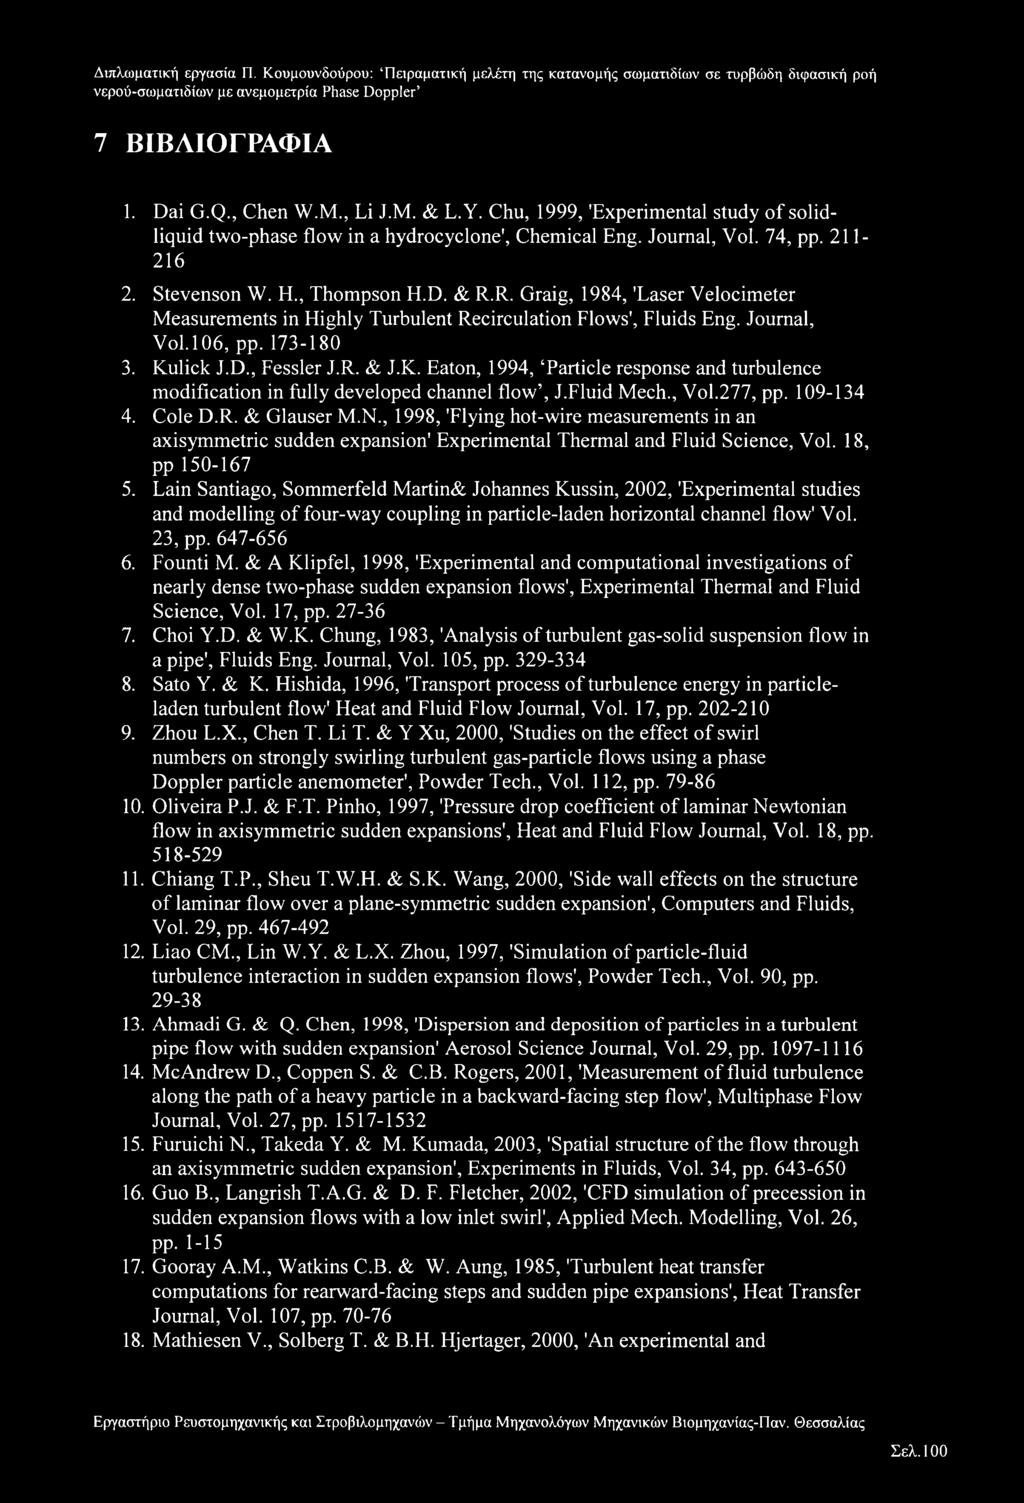 lick J.D., Fessler J.R. & J.K. Eaton, 1994, Particle response and turbulence modification in fully developed channel flow, J.Fluid Mech., Vol.277, pp. 109-134 4. Cole D.R. & Glauser M.N.